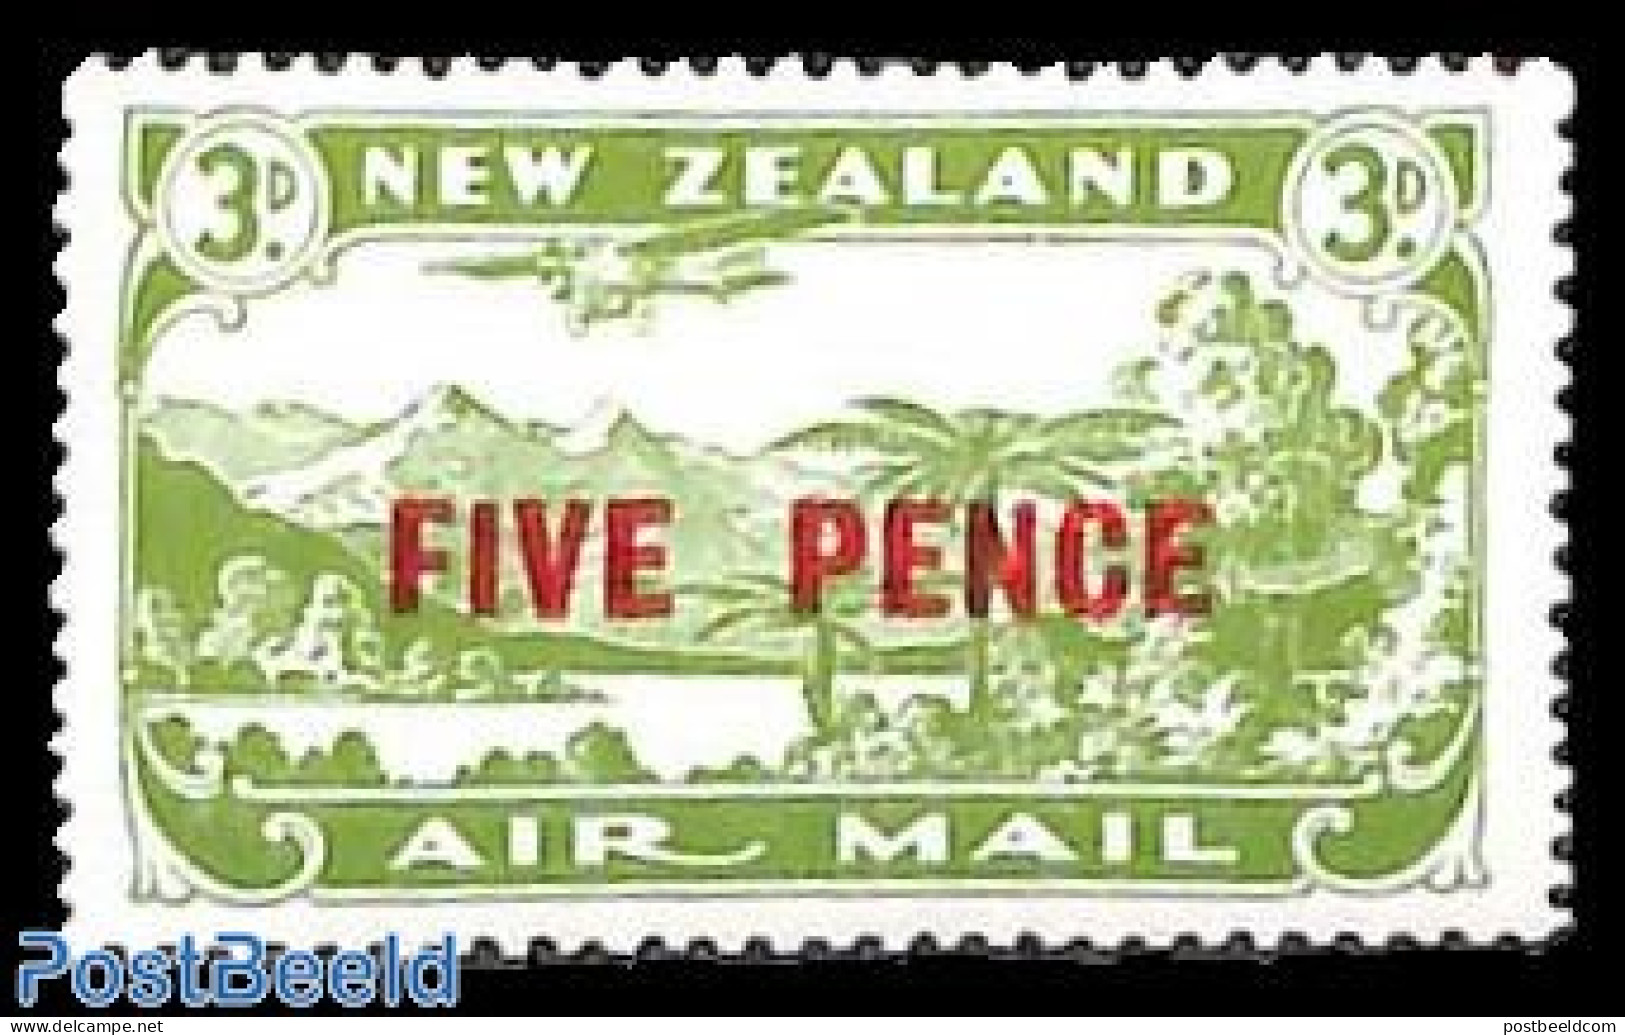 New Zealand 1931 Airmail Overprint 1v, Unused (hinged), Transport - Aircraft & Aviation - Nuovi